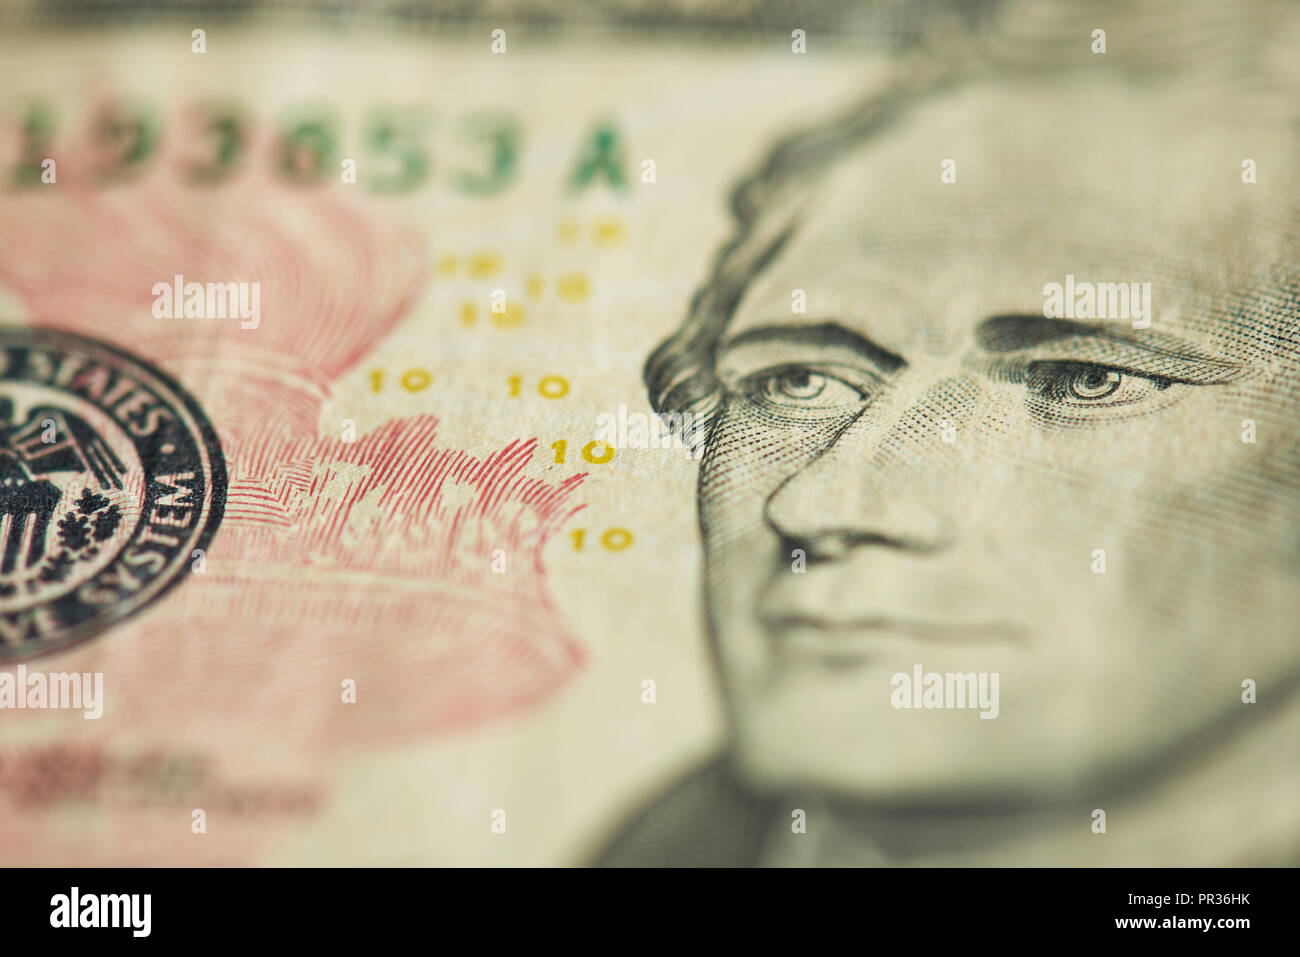 Präsident Hamilton Portrait auf Dollar banknote Nähe zu sehen. Stockfoto